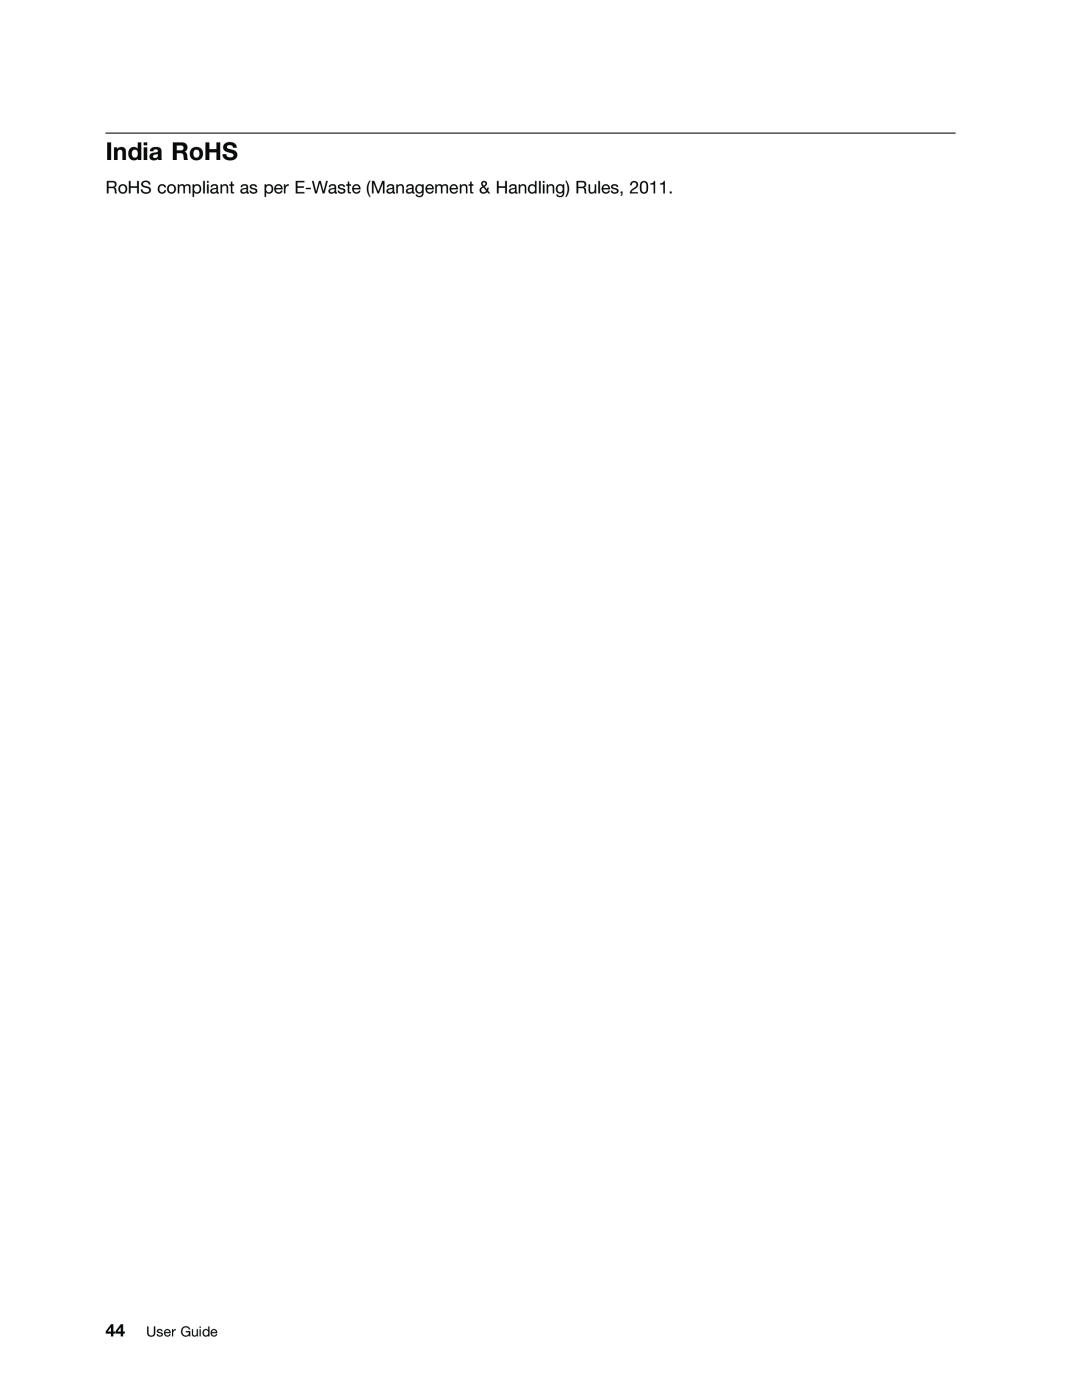 Lenovo B470E manual India RoHS, RoHS compliant as per E-Waste Management & Handling Rules, User Guide 